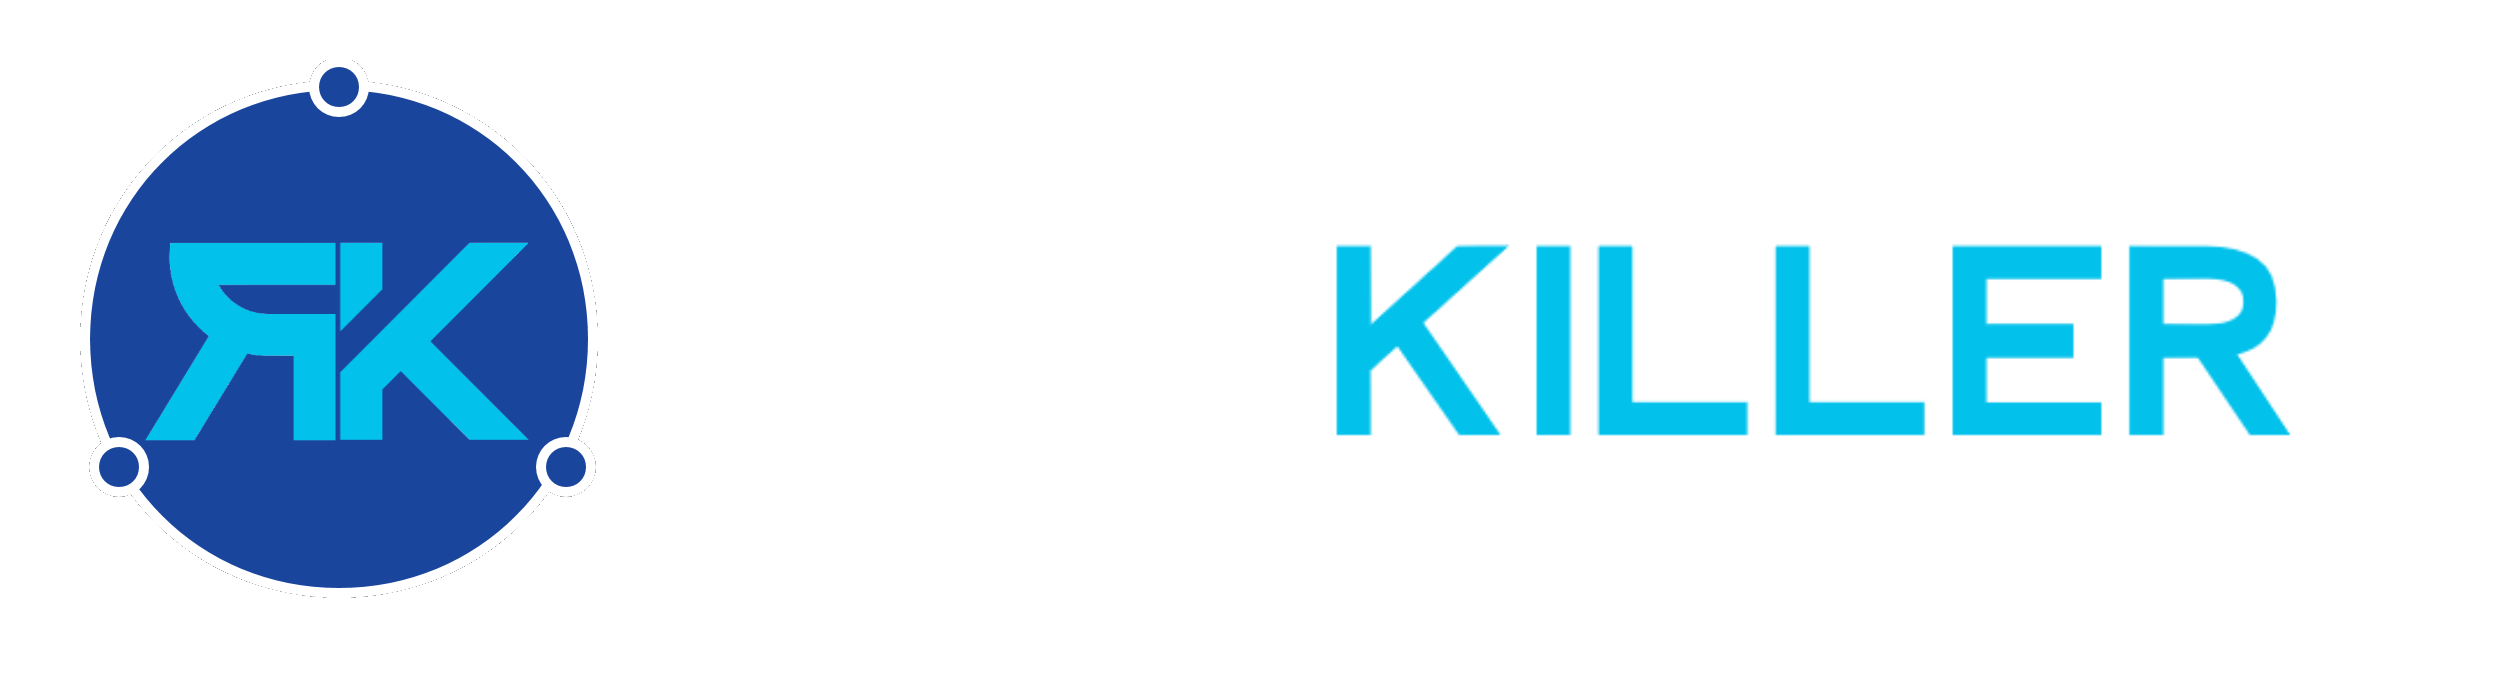 Rug Killer